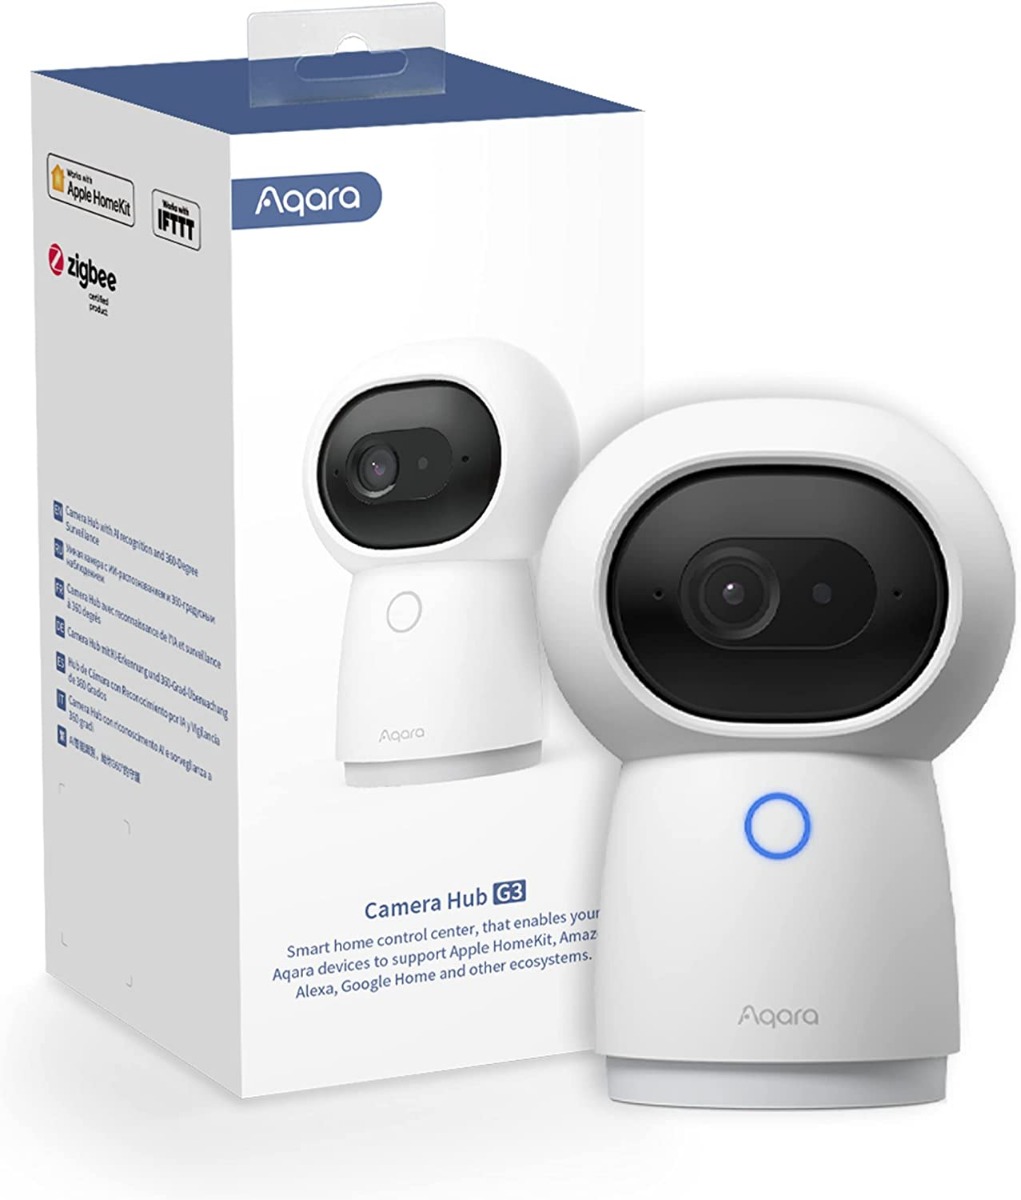 IP камера - контроллер Aqara Smart Camera G3 (CH-H03), ZigBee 3.0, ИК-порт, Управление жестами